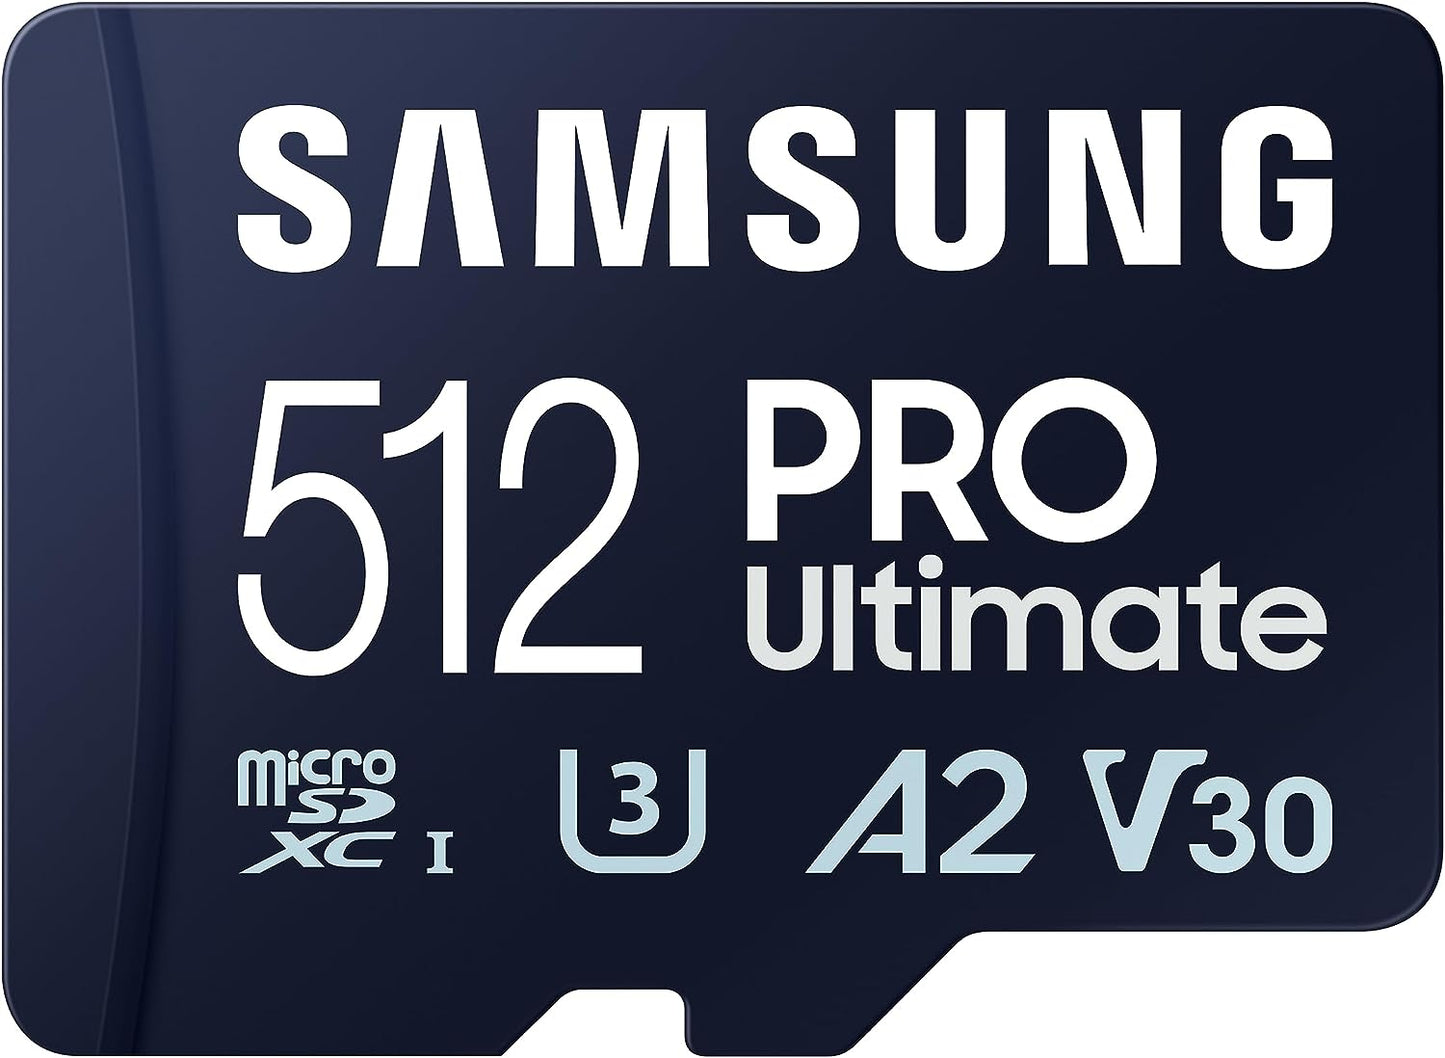 Samsung microSD PRO Ultimate 512B Memory Card